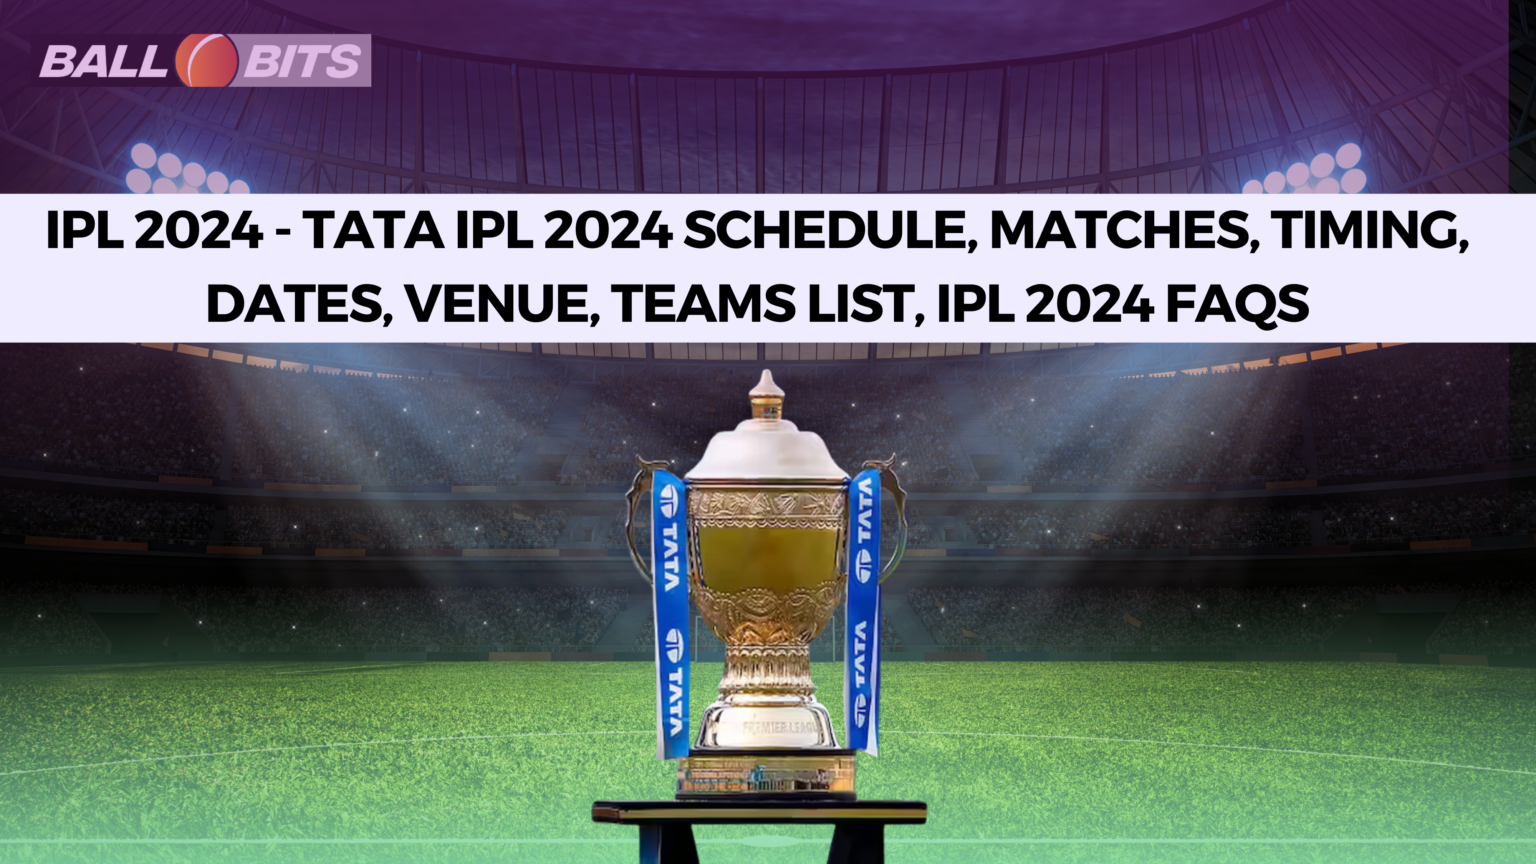 TATA IPL 2024 Schedule, Matches, Timing, Dates, Venue, Teams List